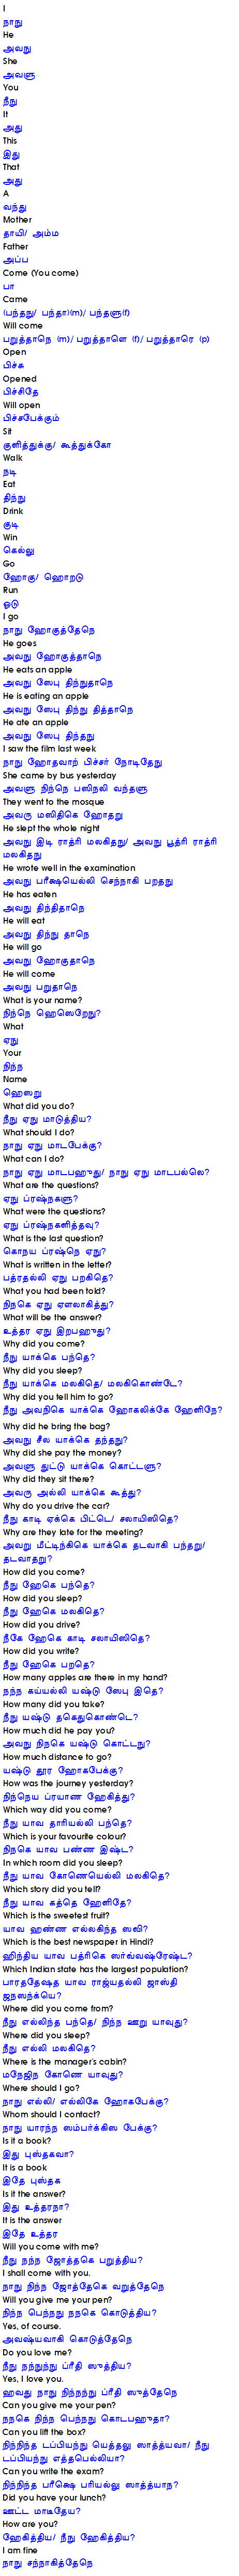 tamil to english dictionary pdf